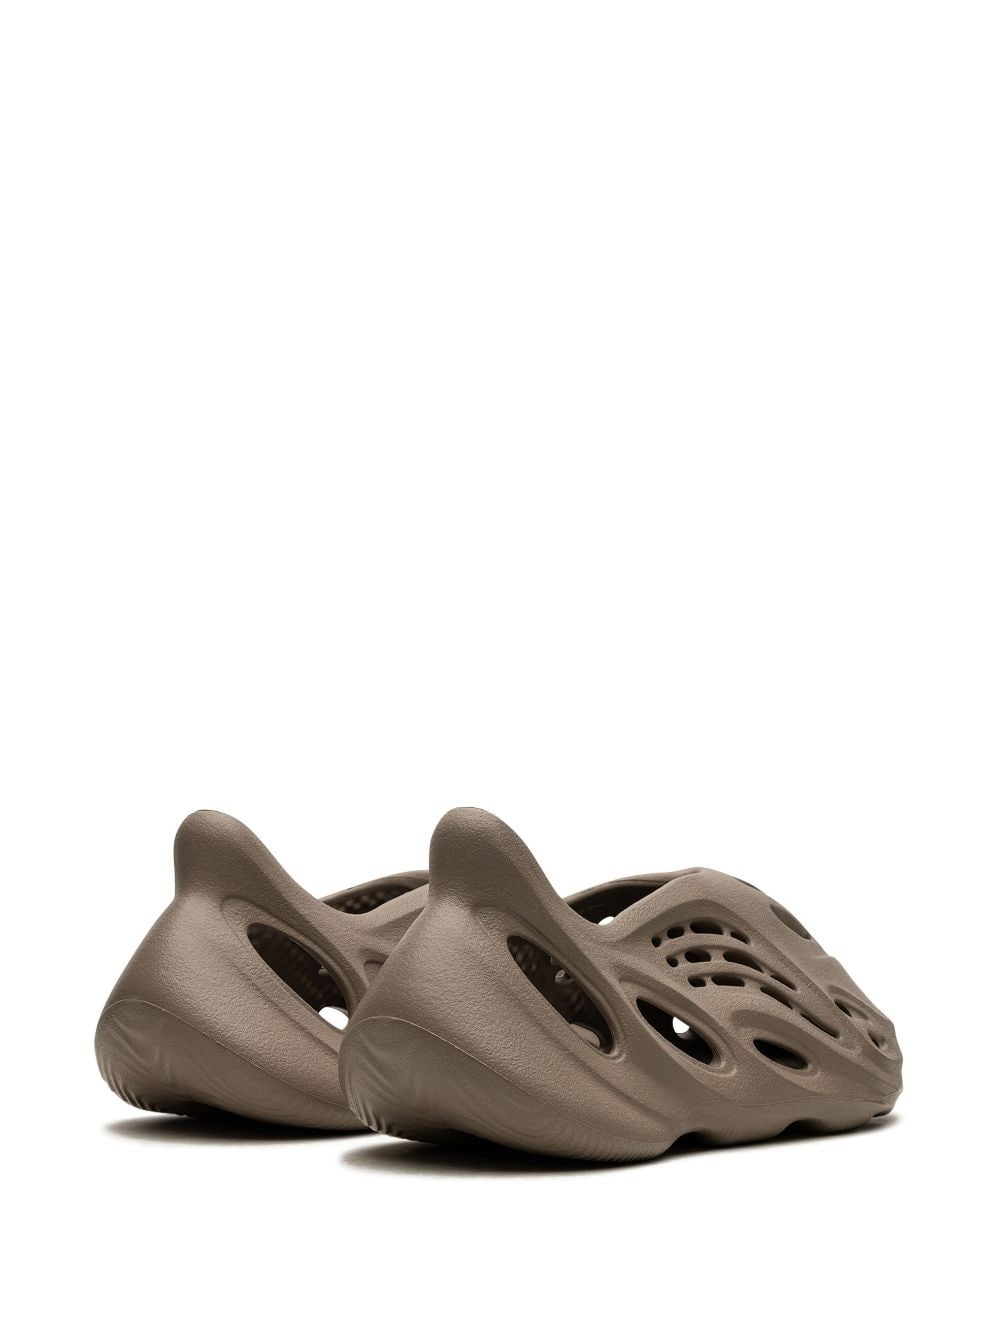 YEEZY Foam Runner "Stone Taupe" sneakers - 3